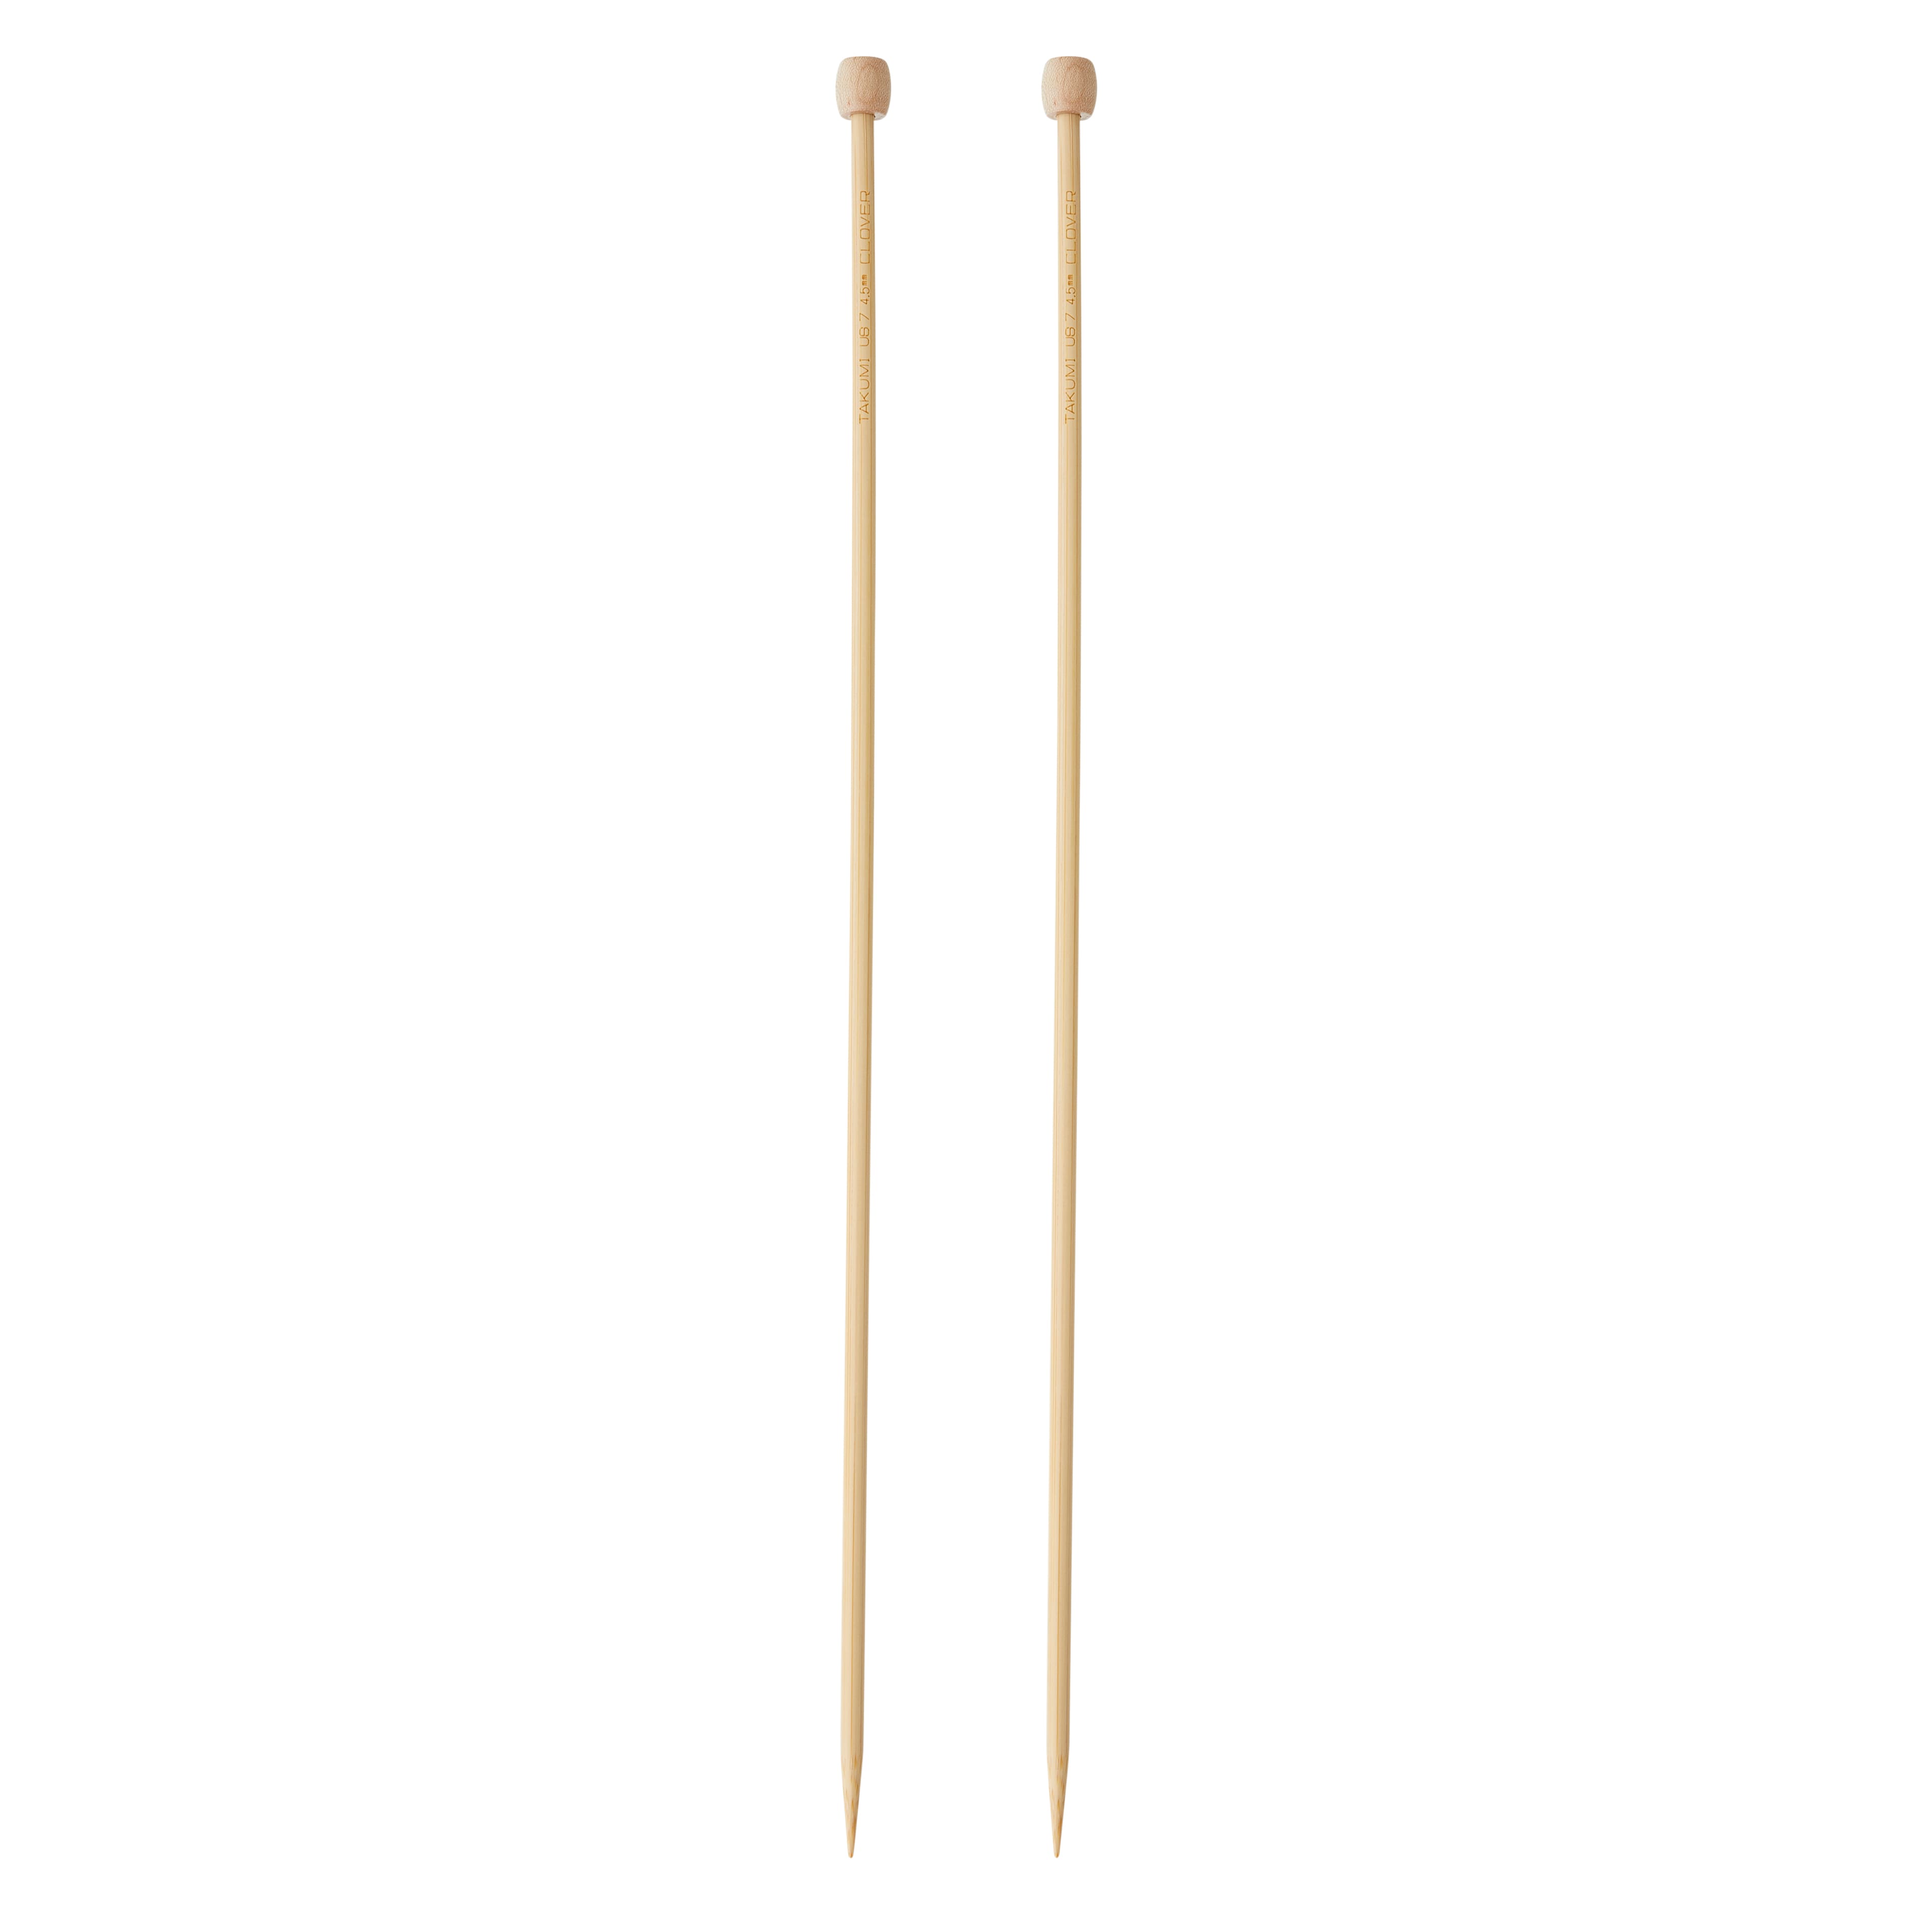 Takumi Bamboo Single Pointed Knitting Needles, 13